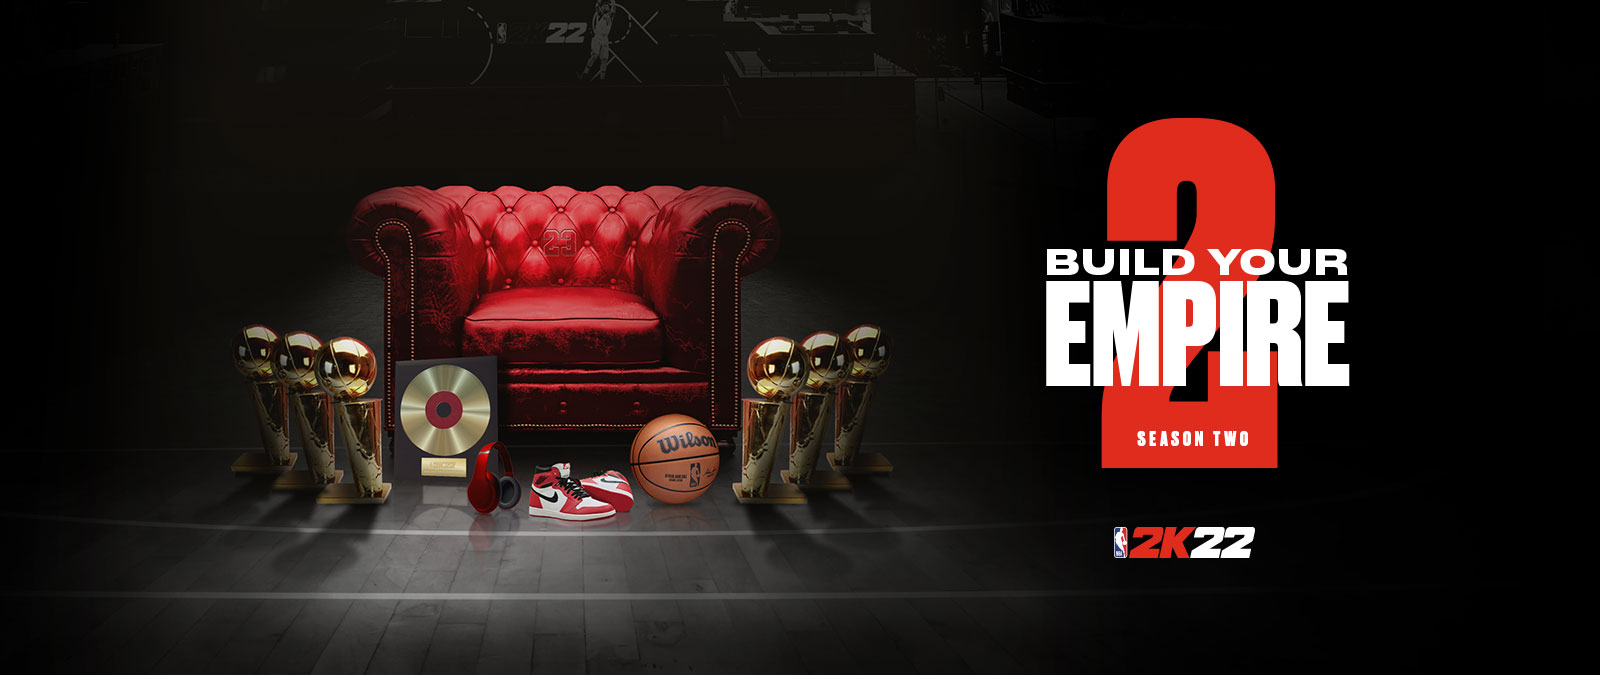 Bygg ditt imperium i Season 2 av NBA 2k22: Flere trofeer står rundt en rød lærstol.